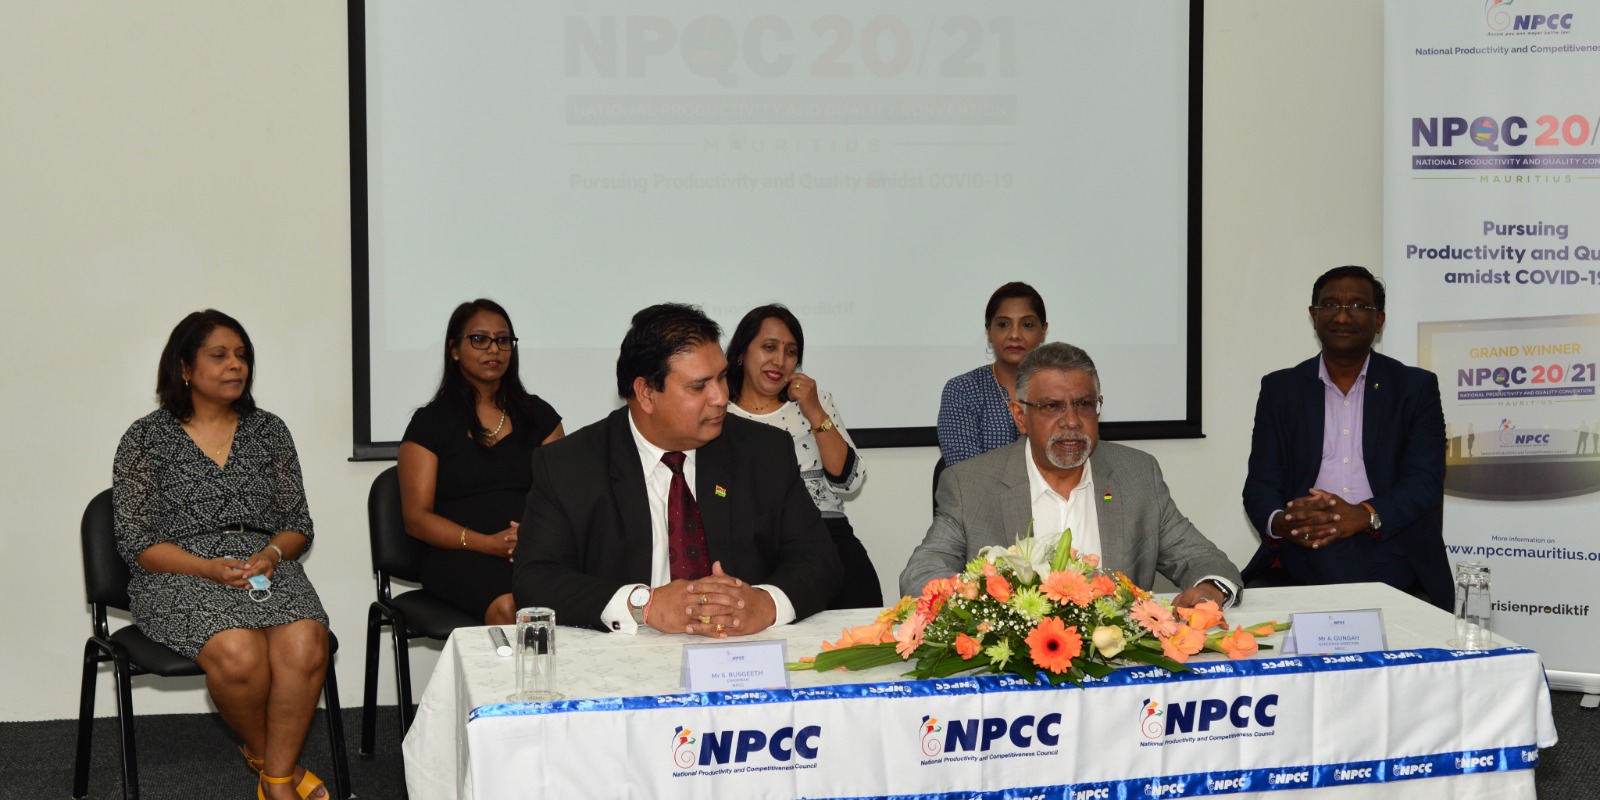 NPQC 2020 - 2021 Press Launch 25.11.20